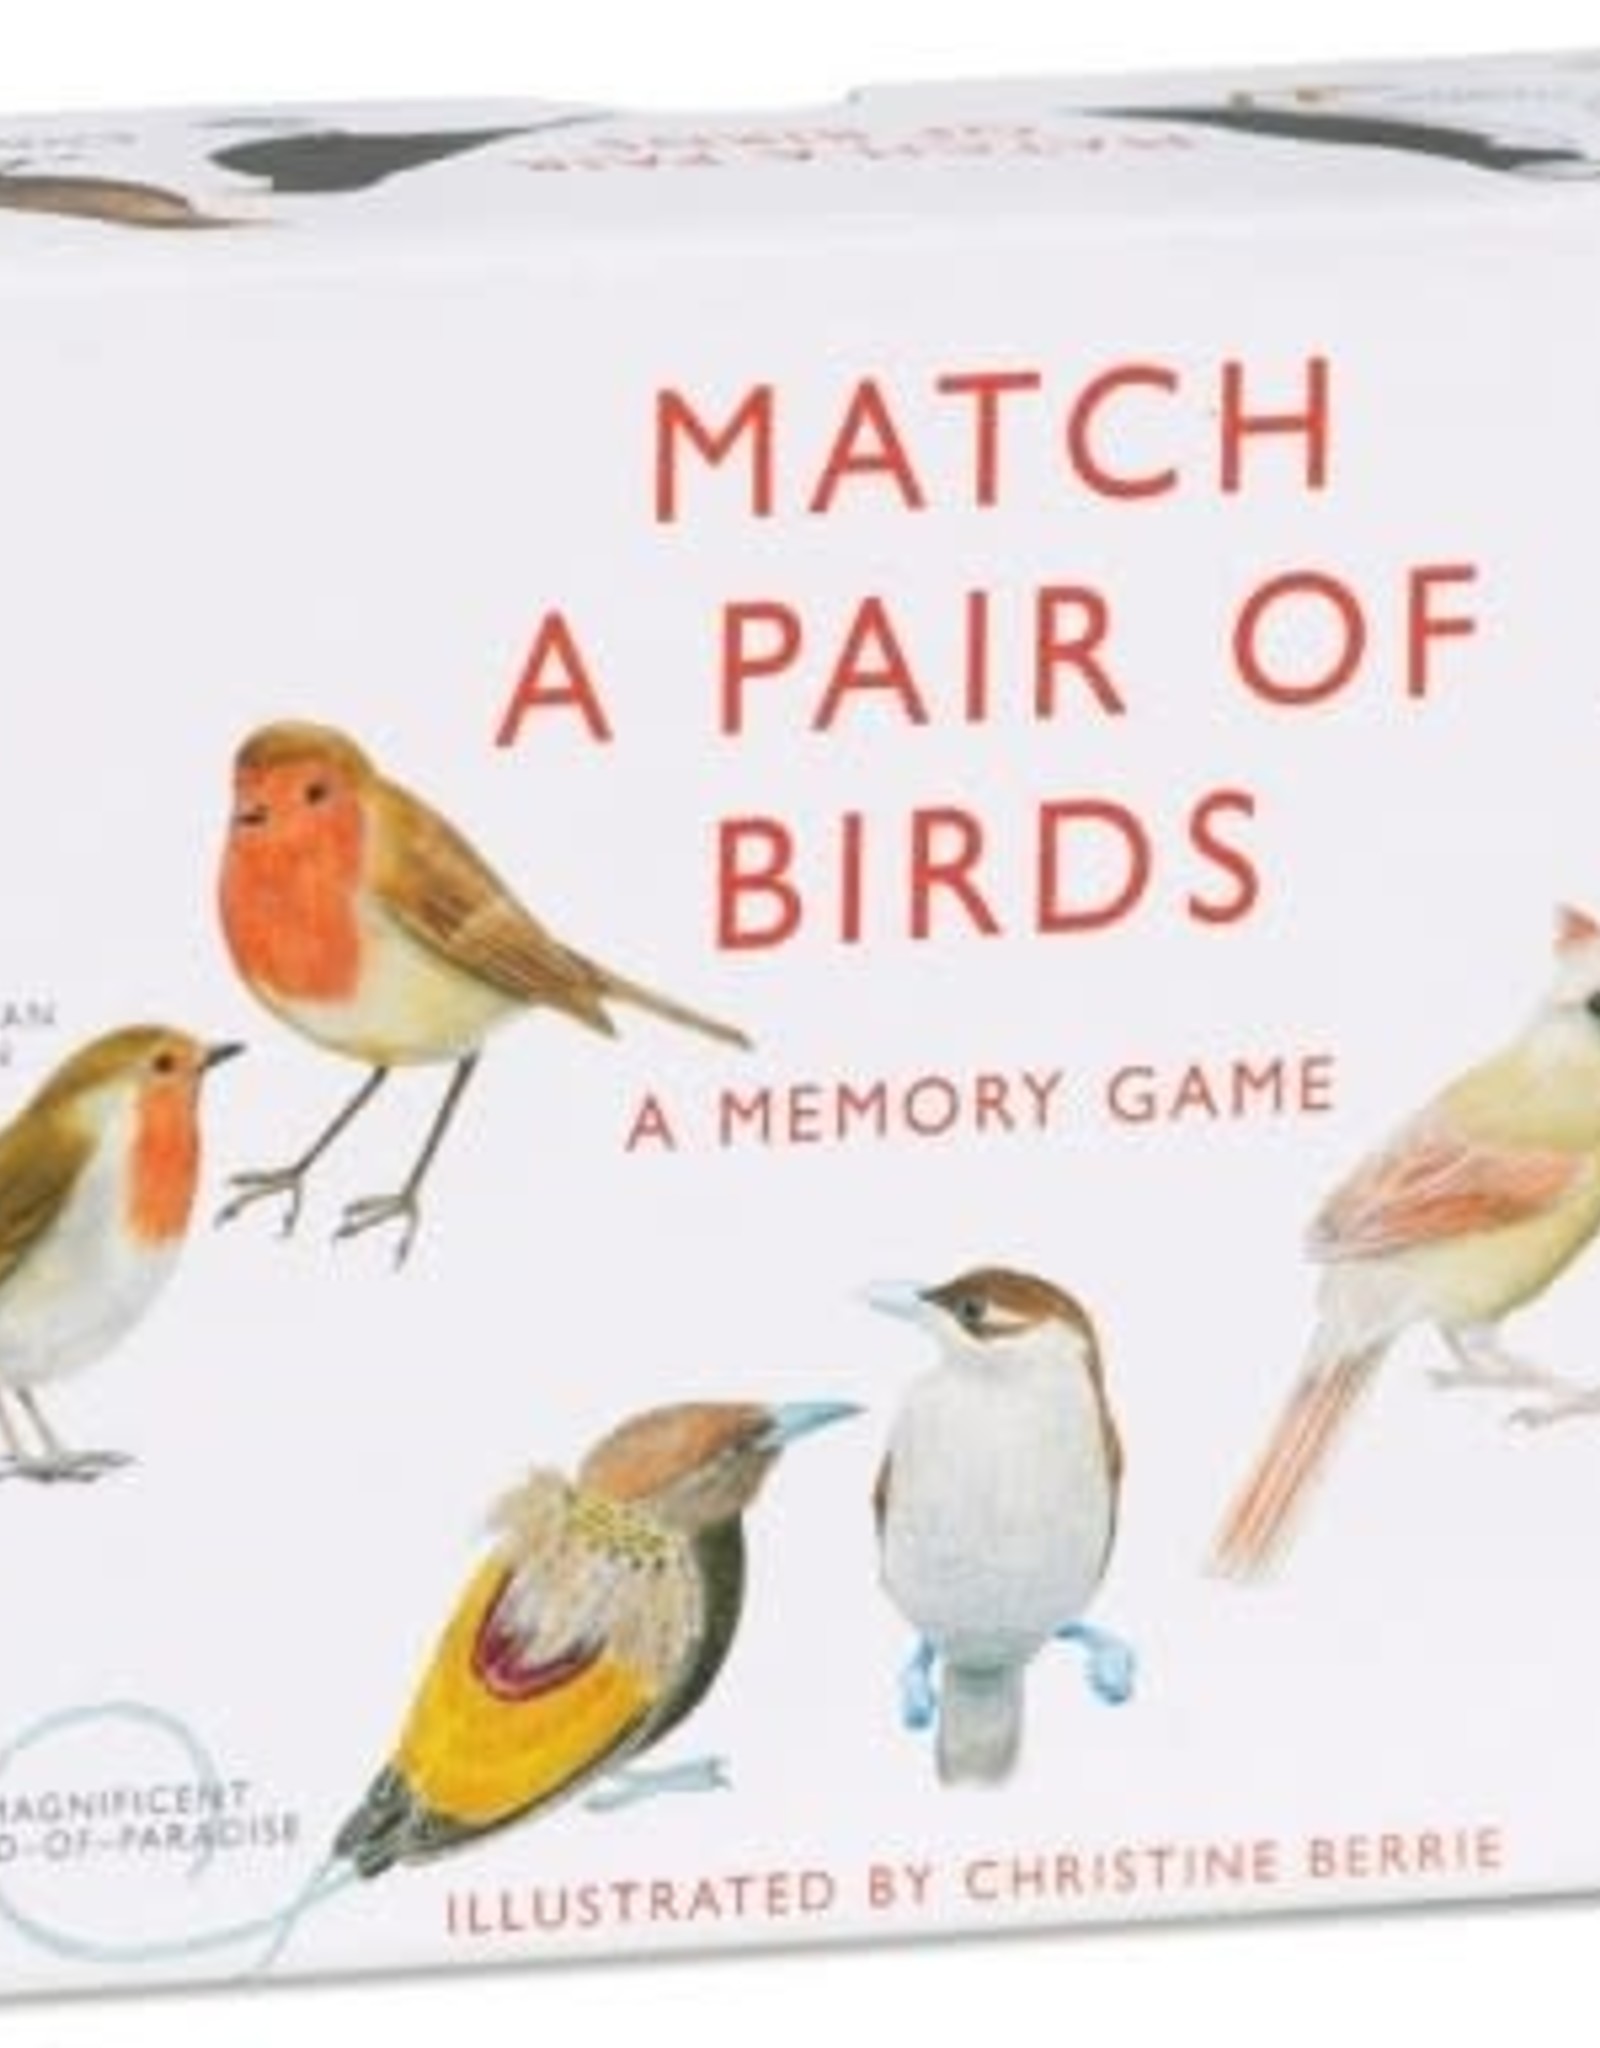 Match a Pair of Birds Game